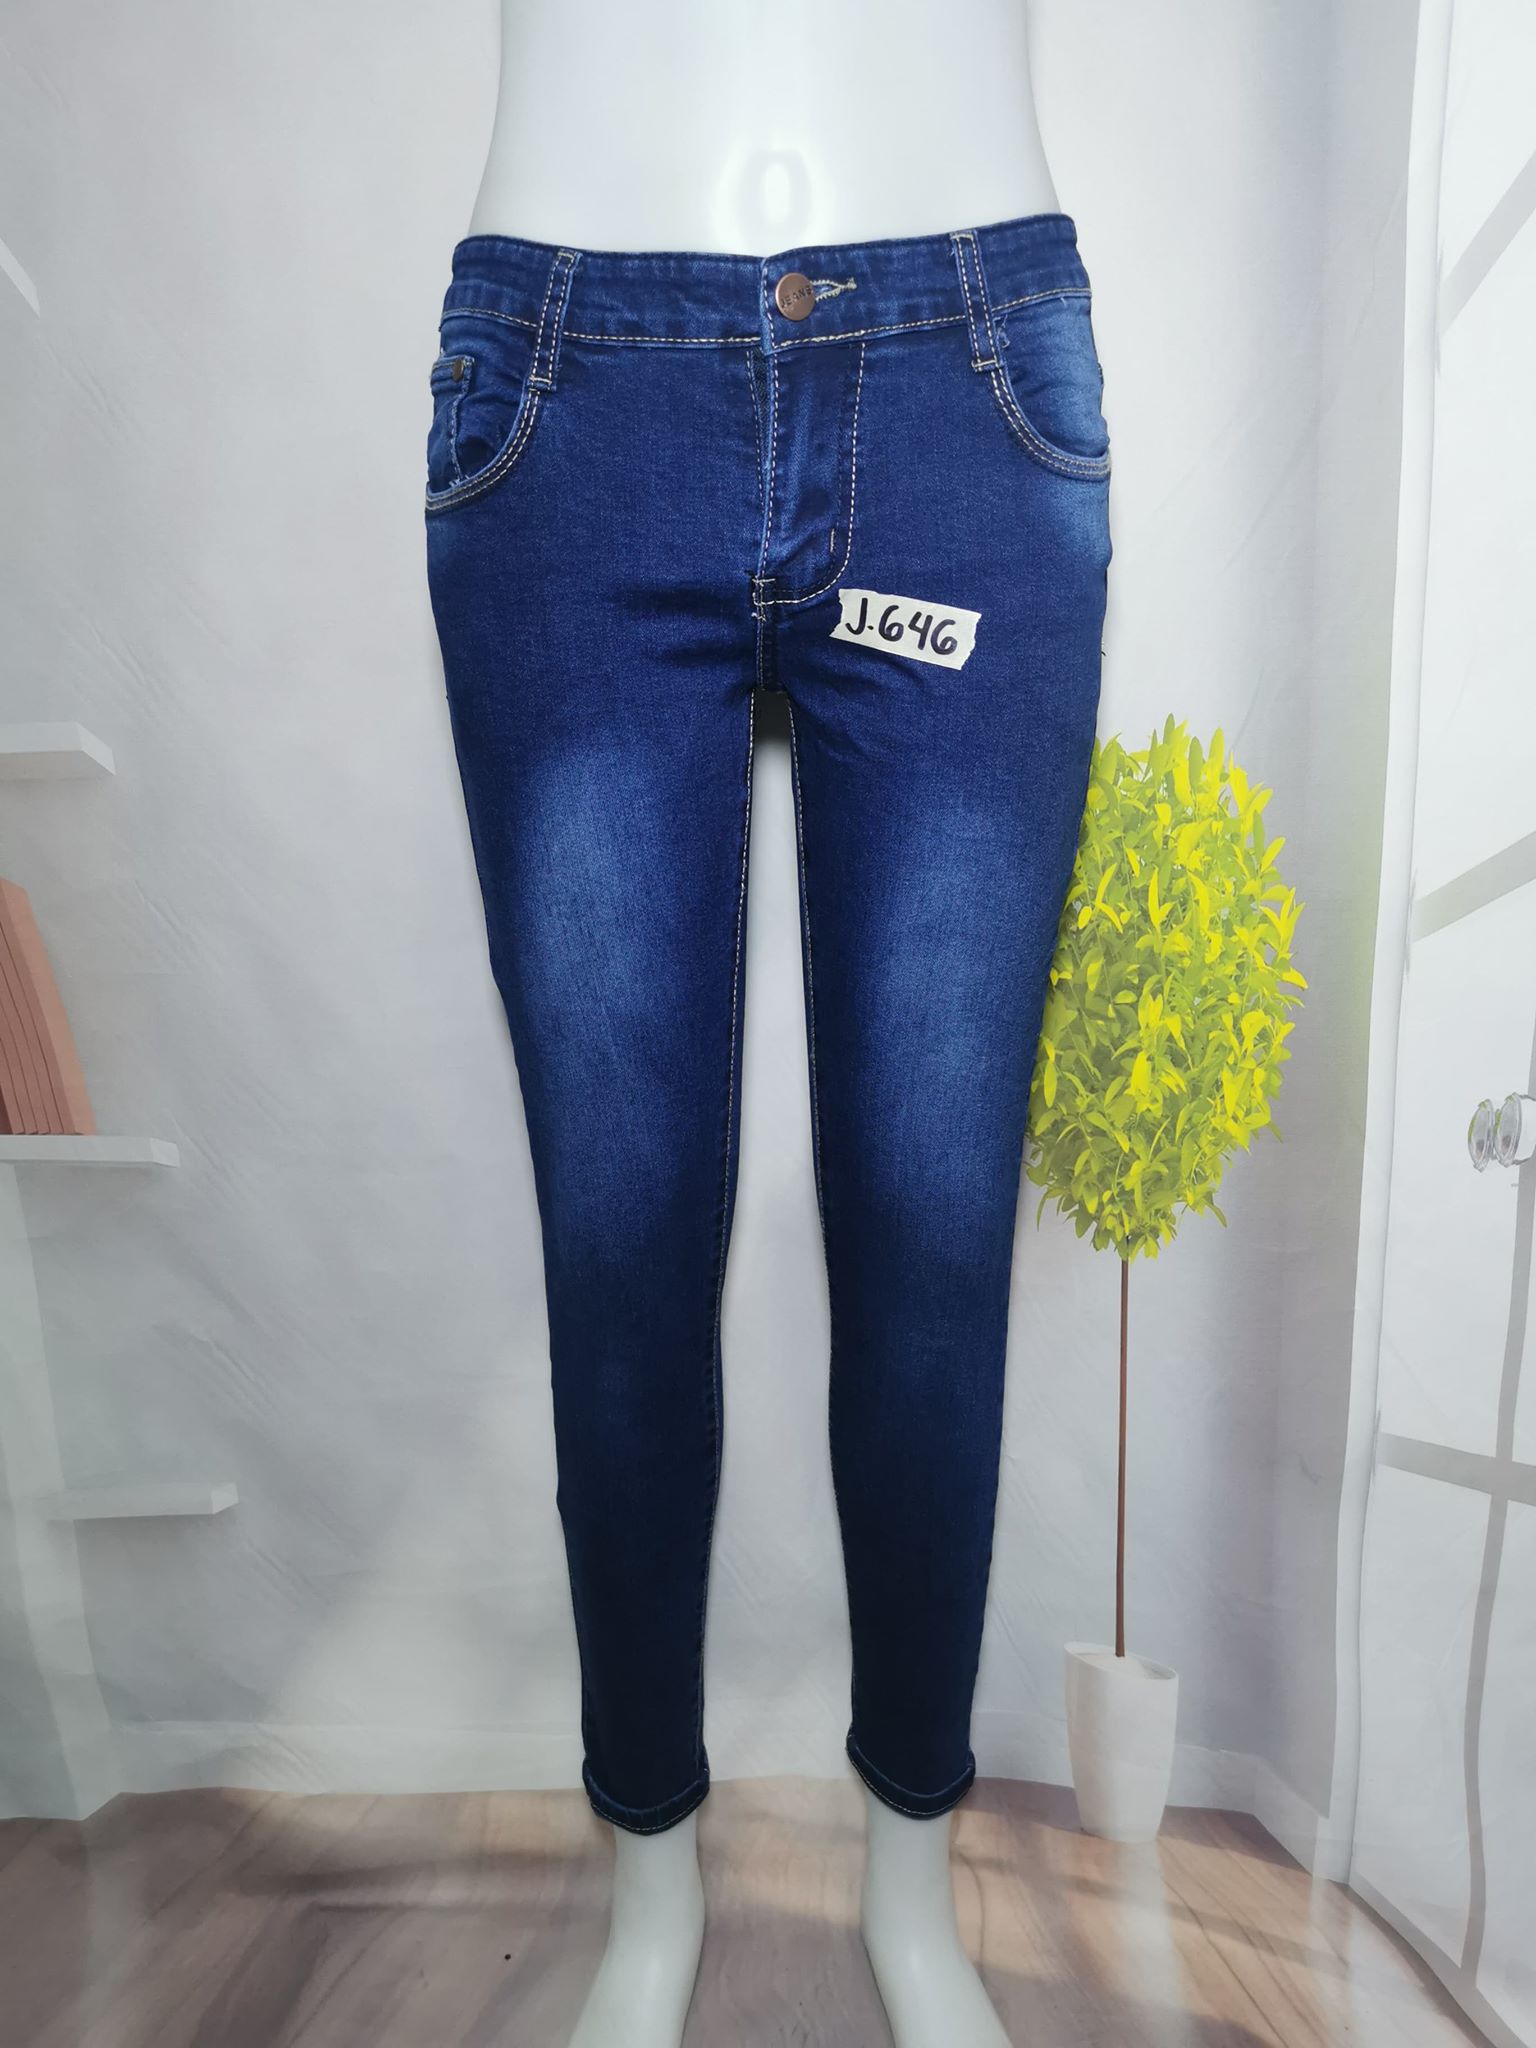 jeans online womens sale